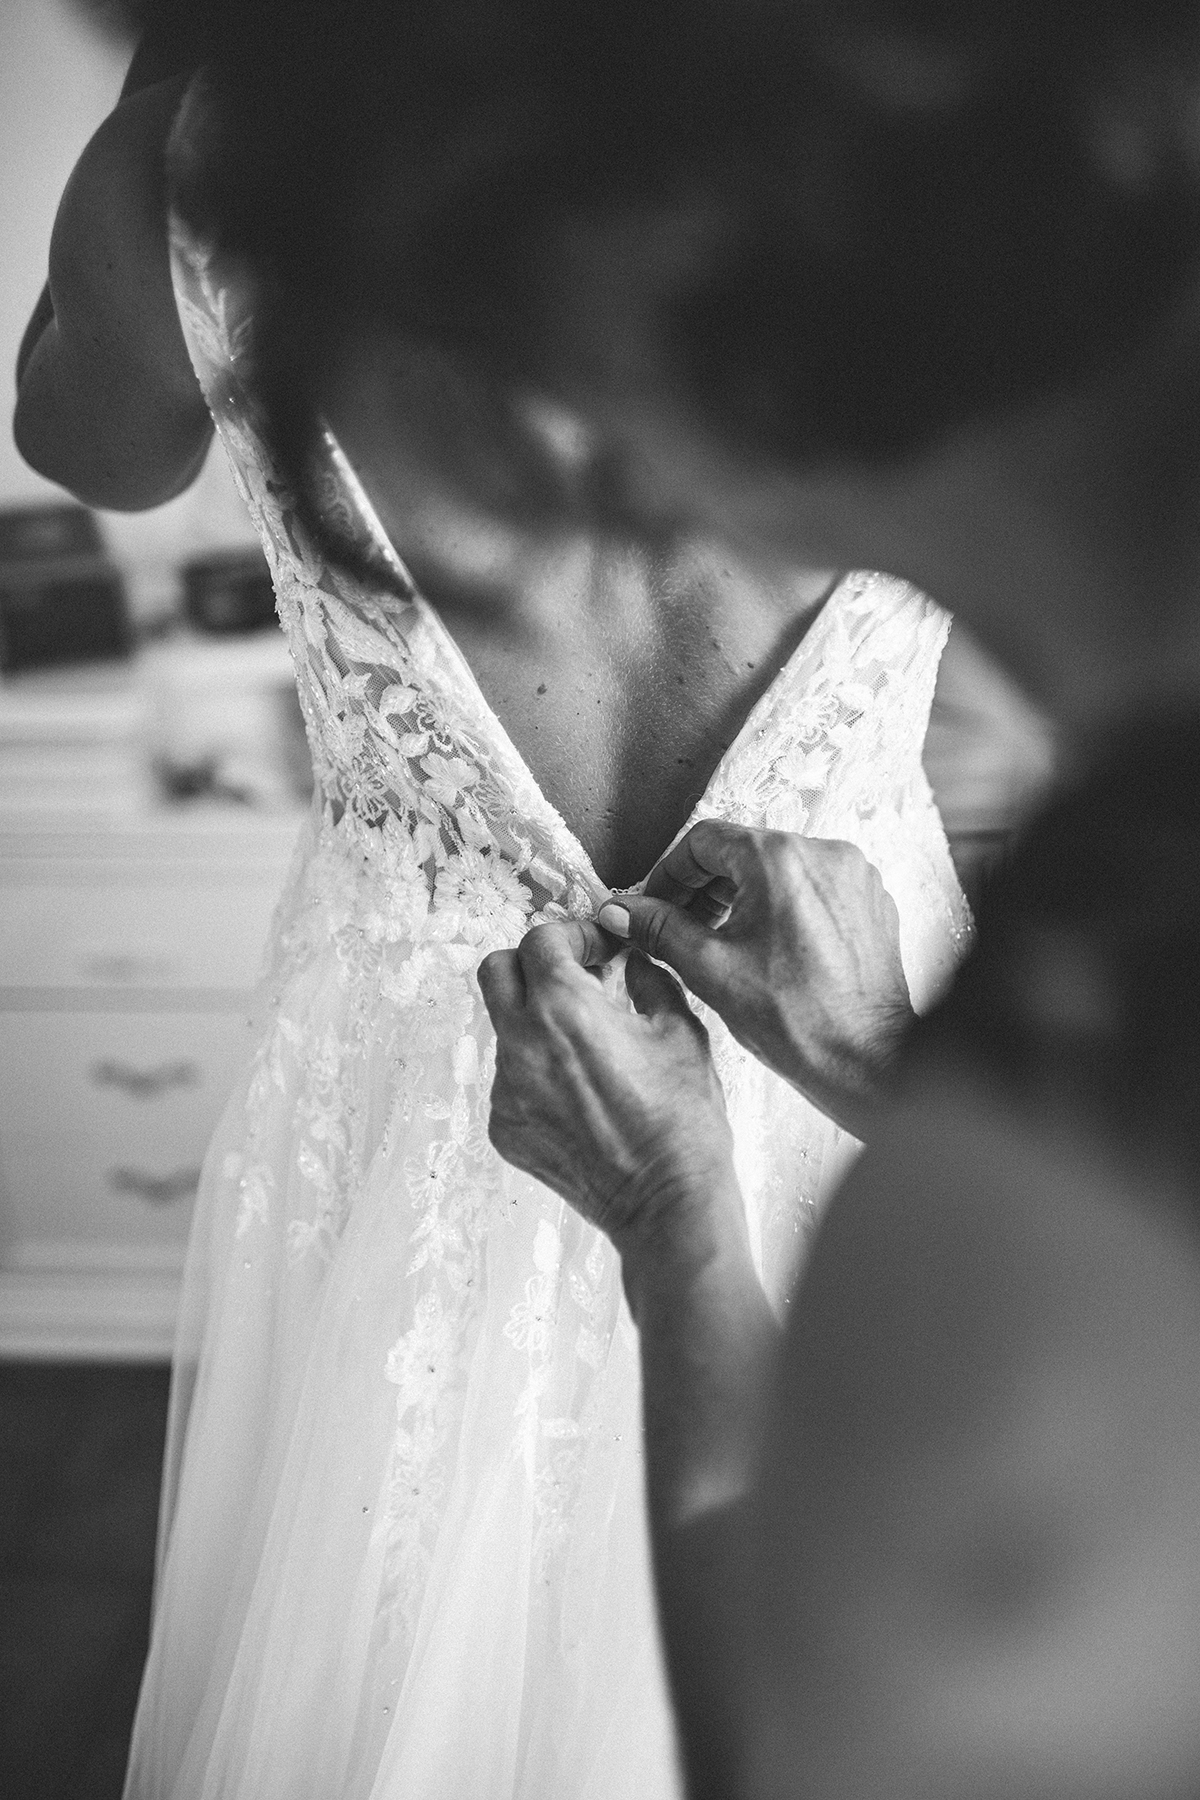 The bride's dress